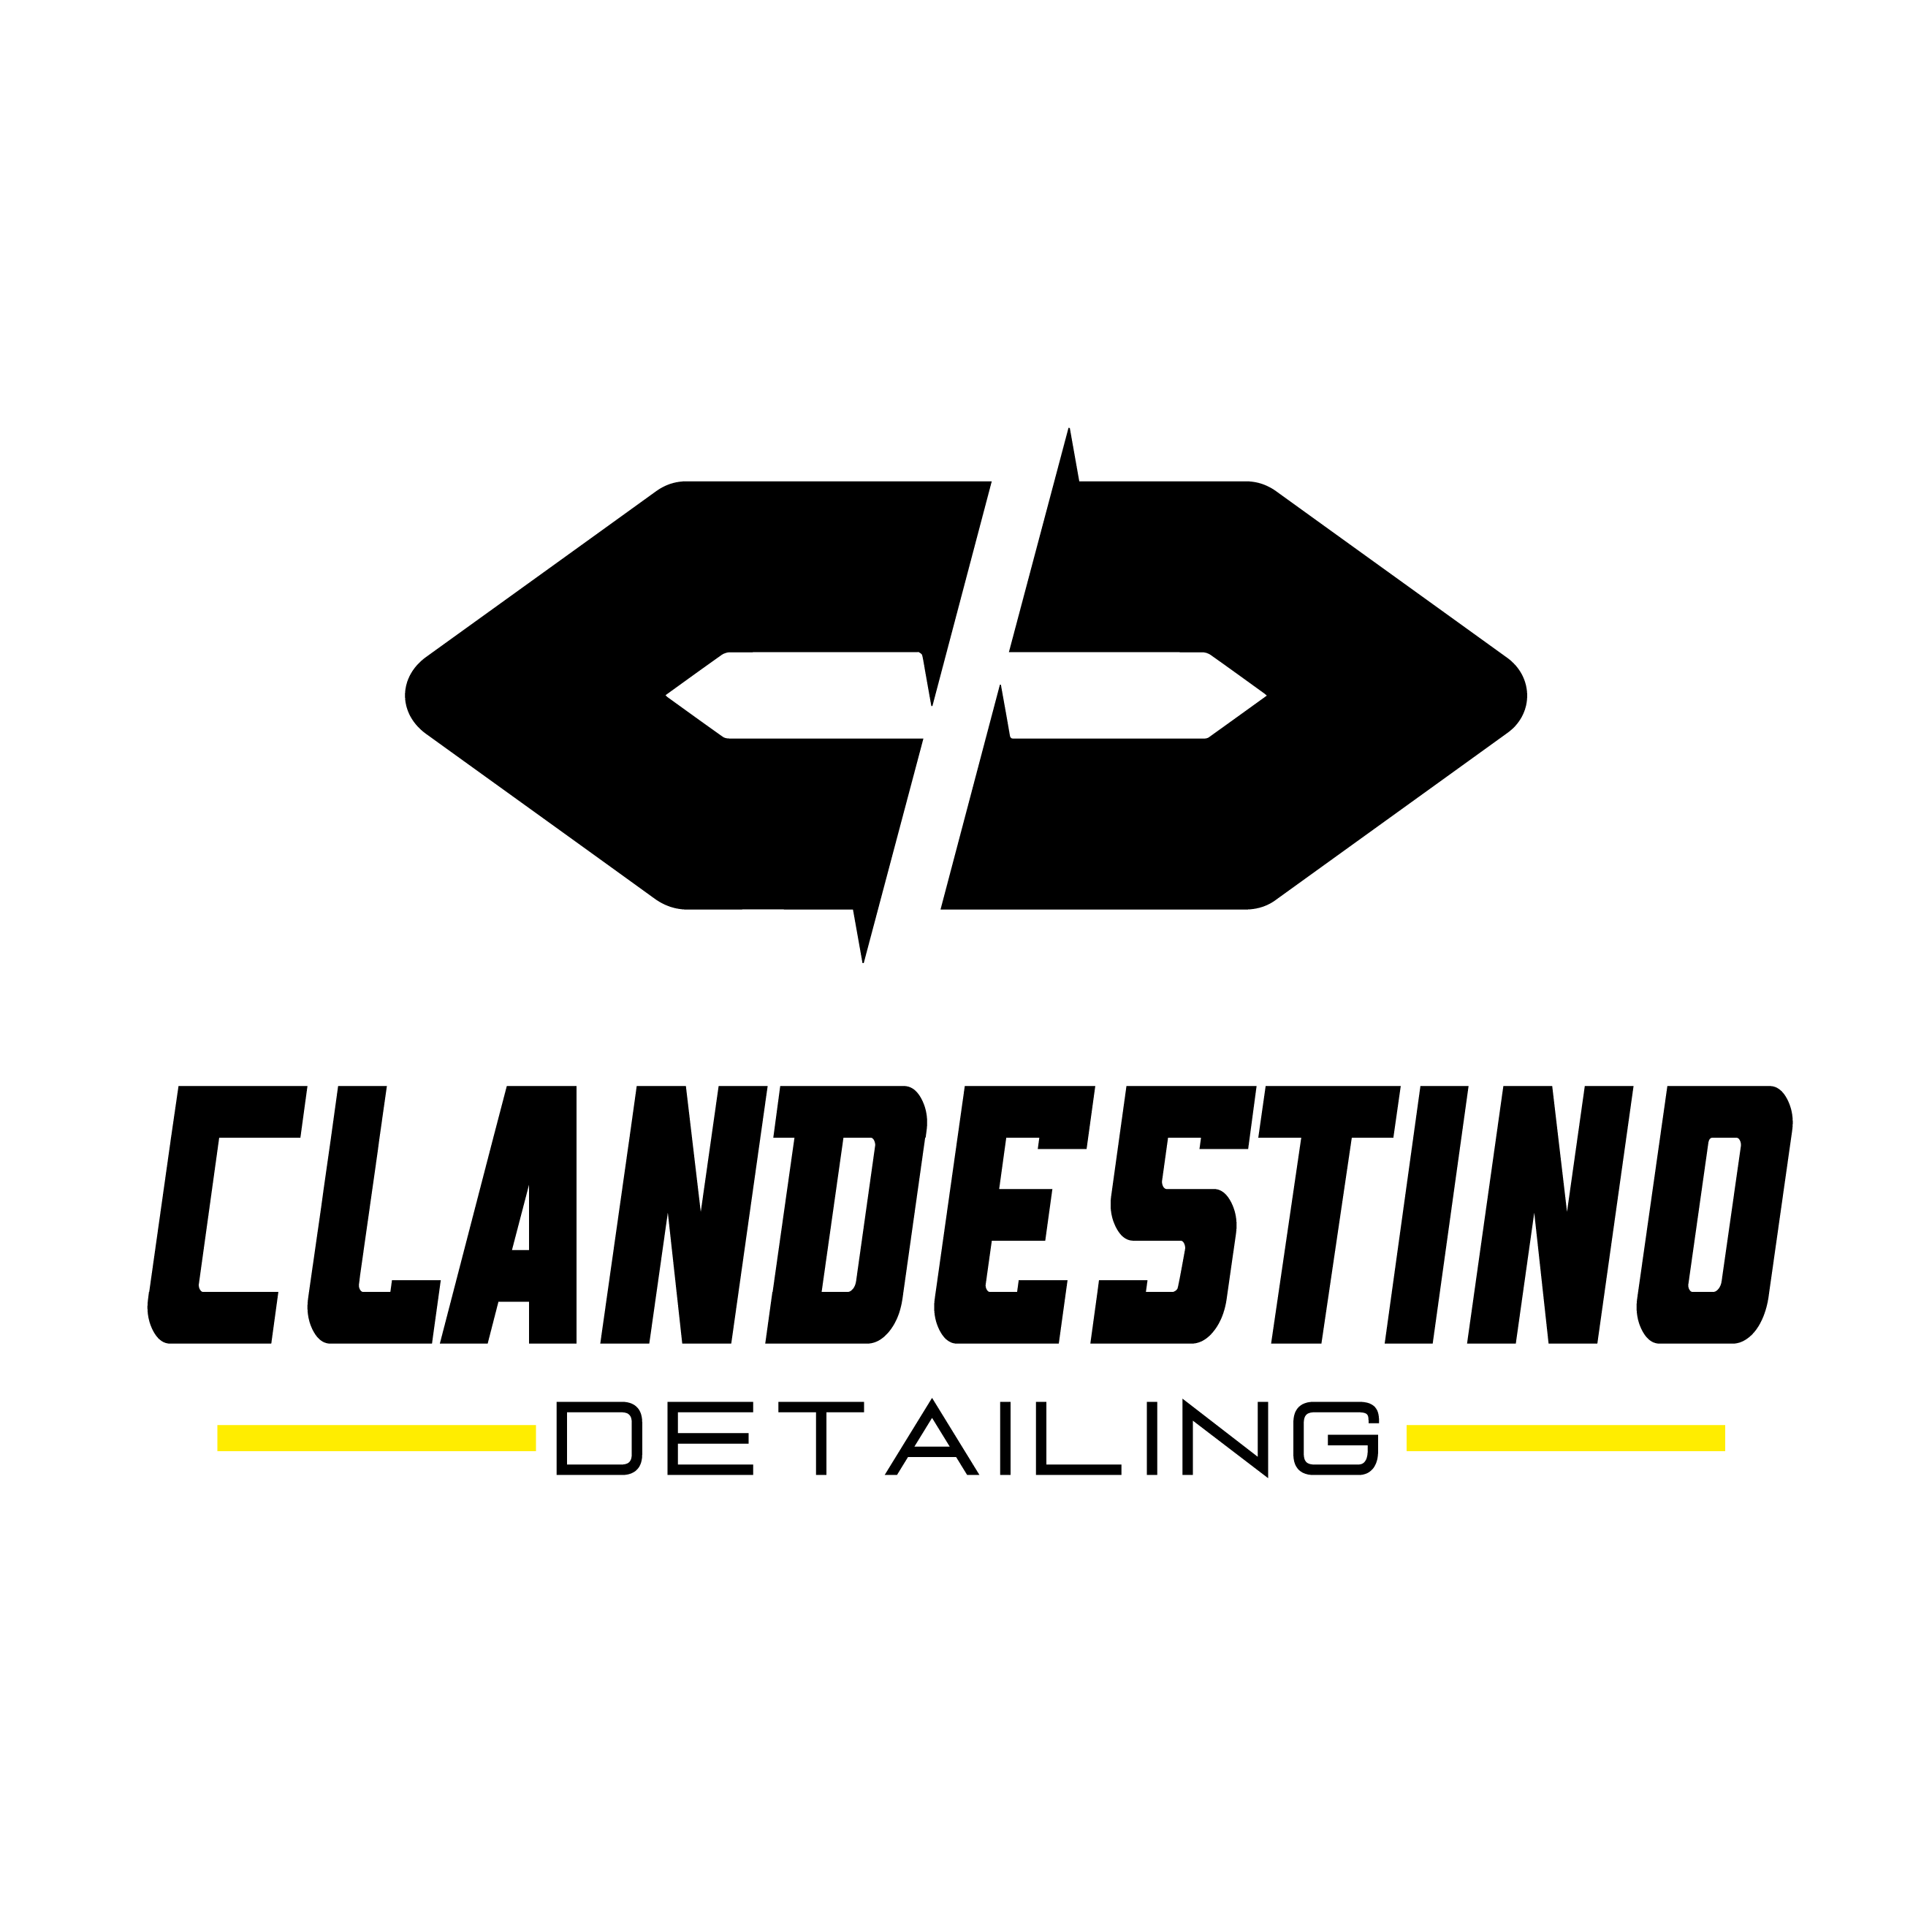 CLANDESTINO DETAILING